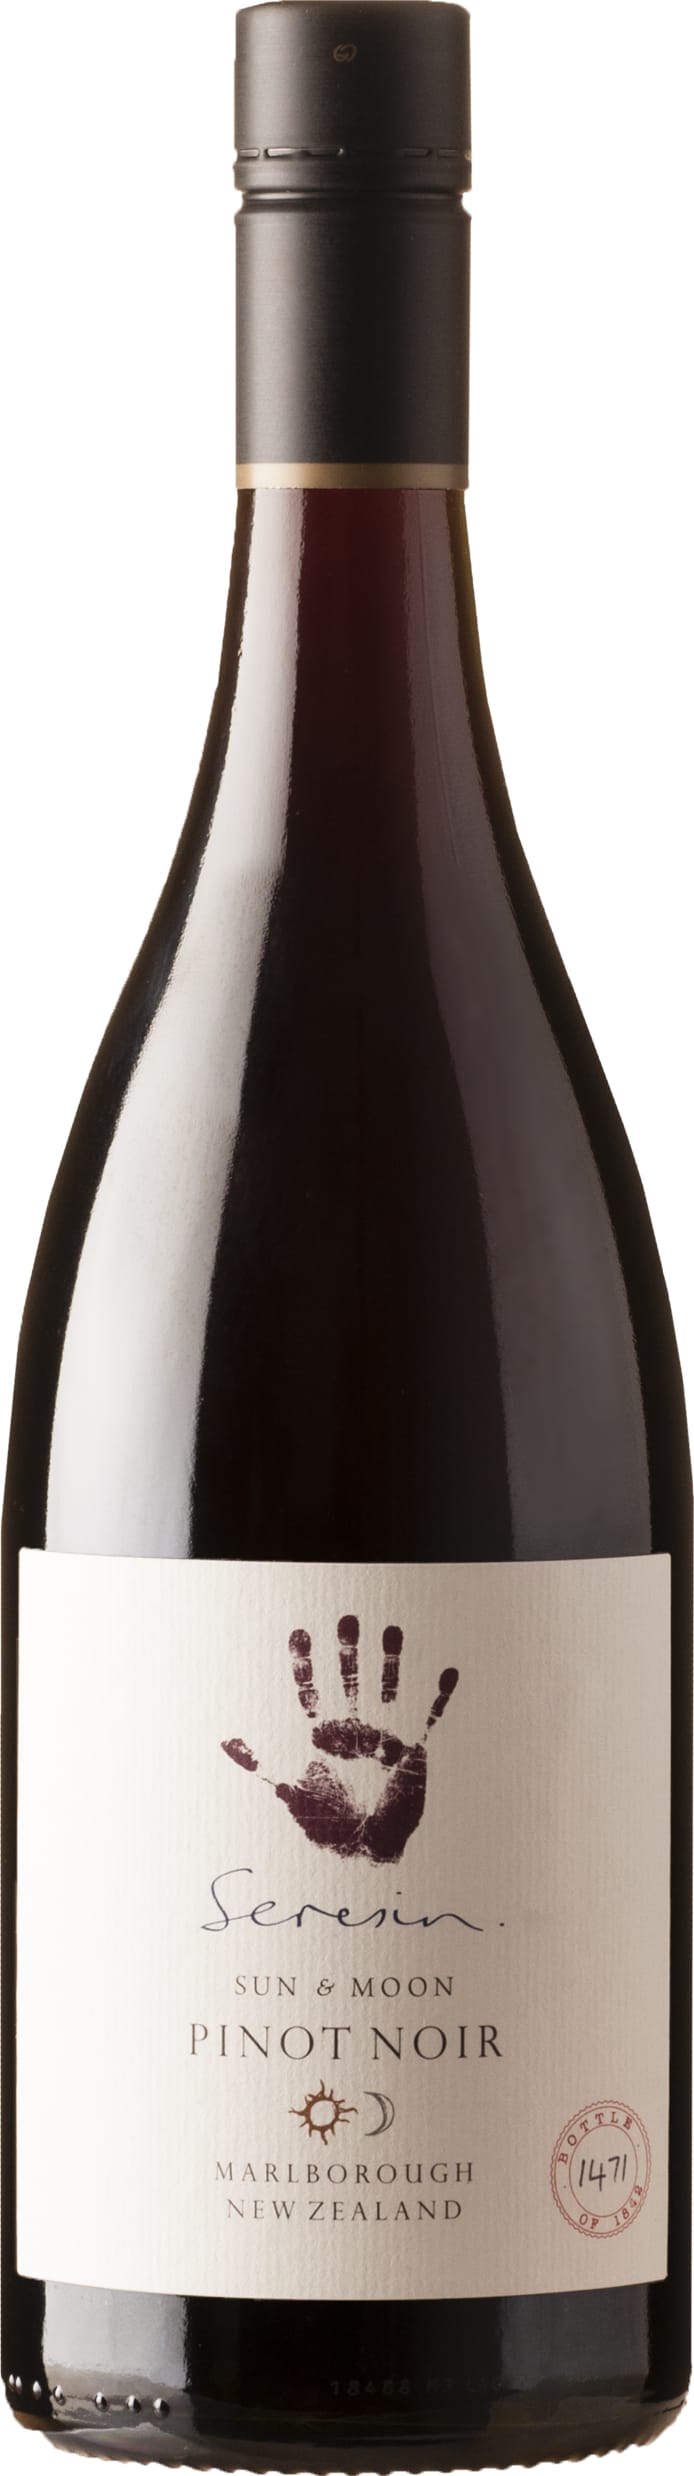 Seresin Estate Sun and Moon Pinot Noir 2015 75cl - Buy Seresin Estate Wines from GREAT WINES DIRECT wine shop